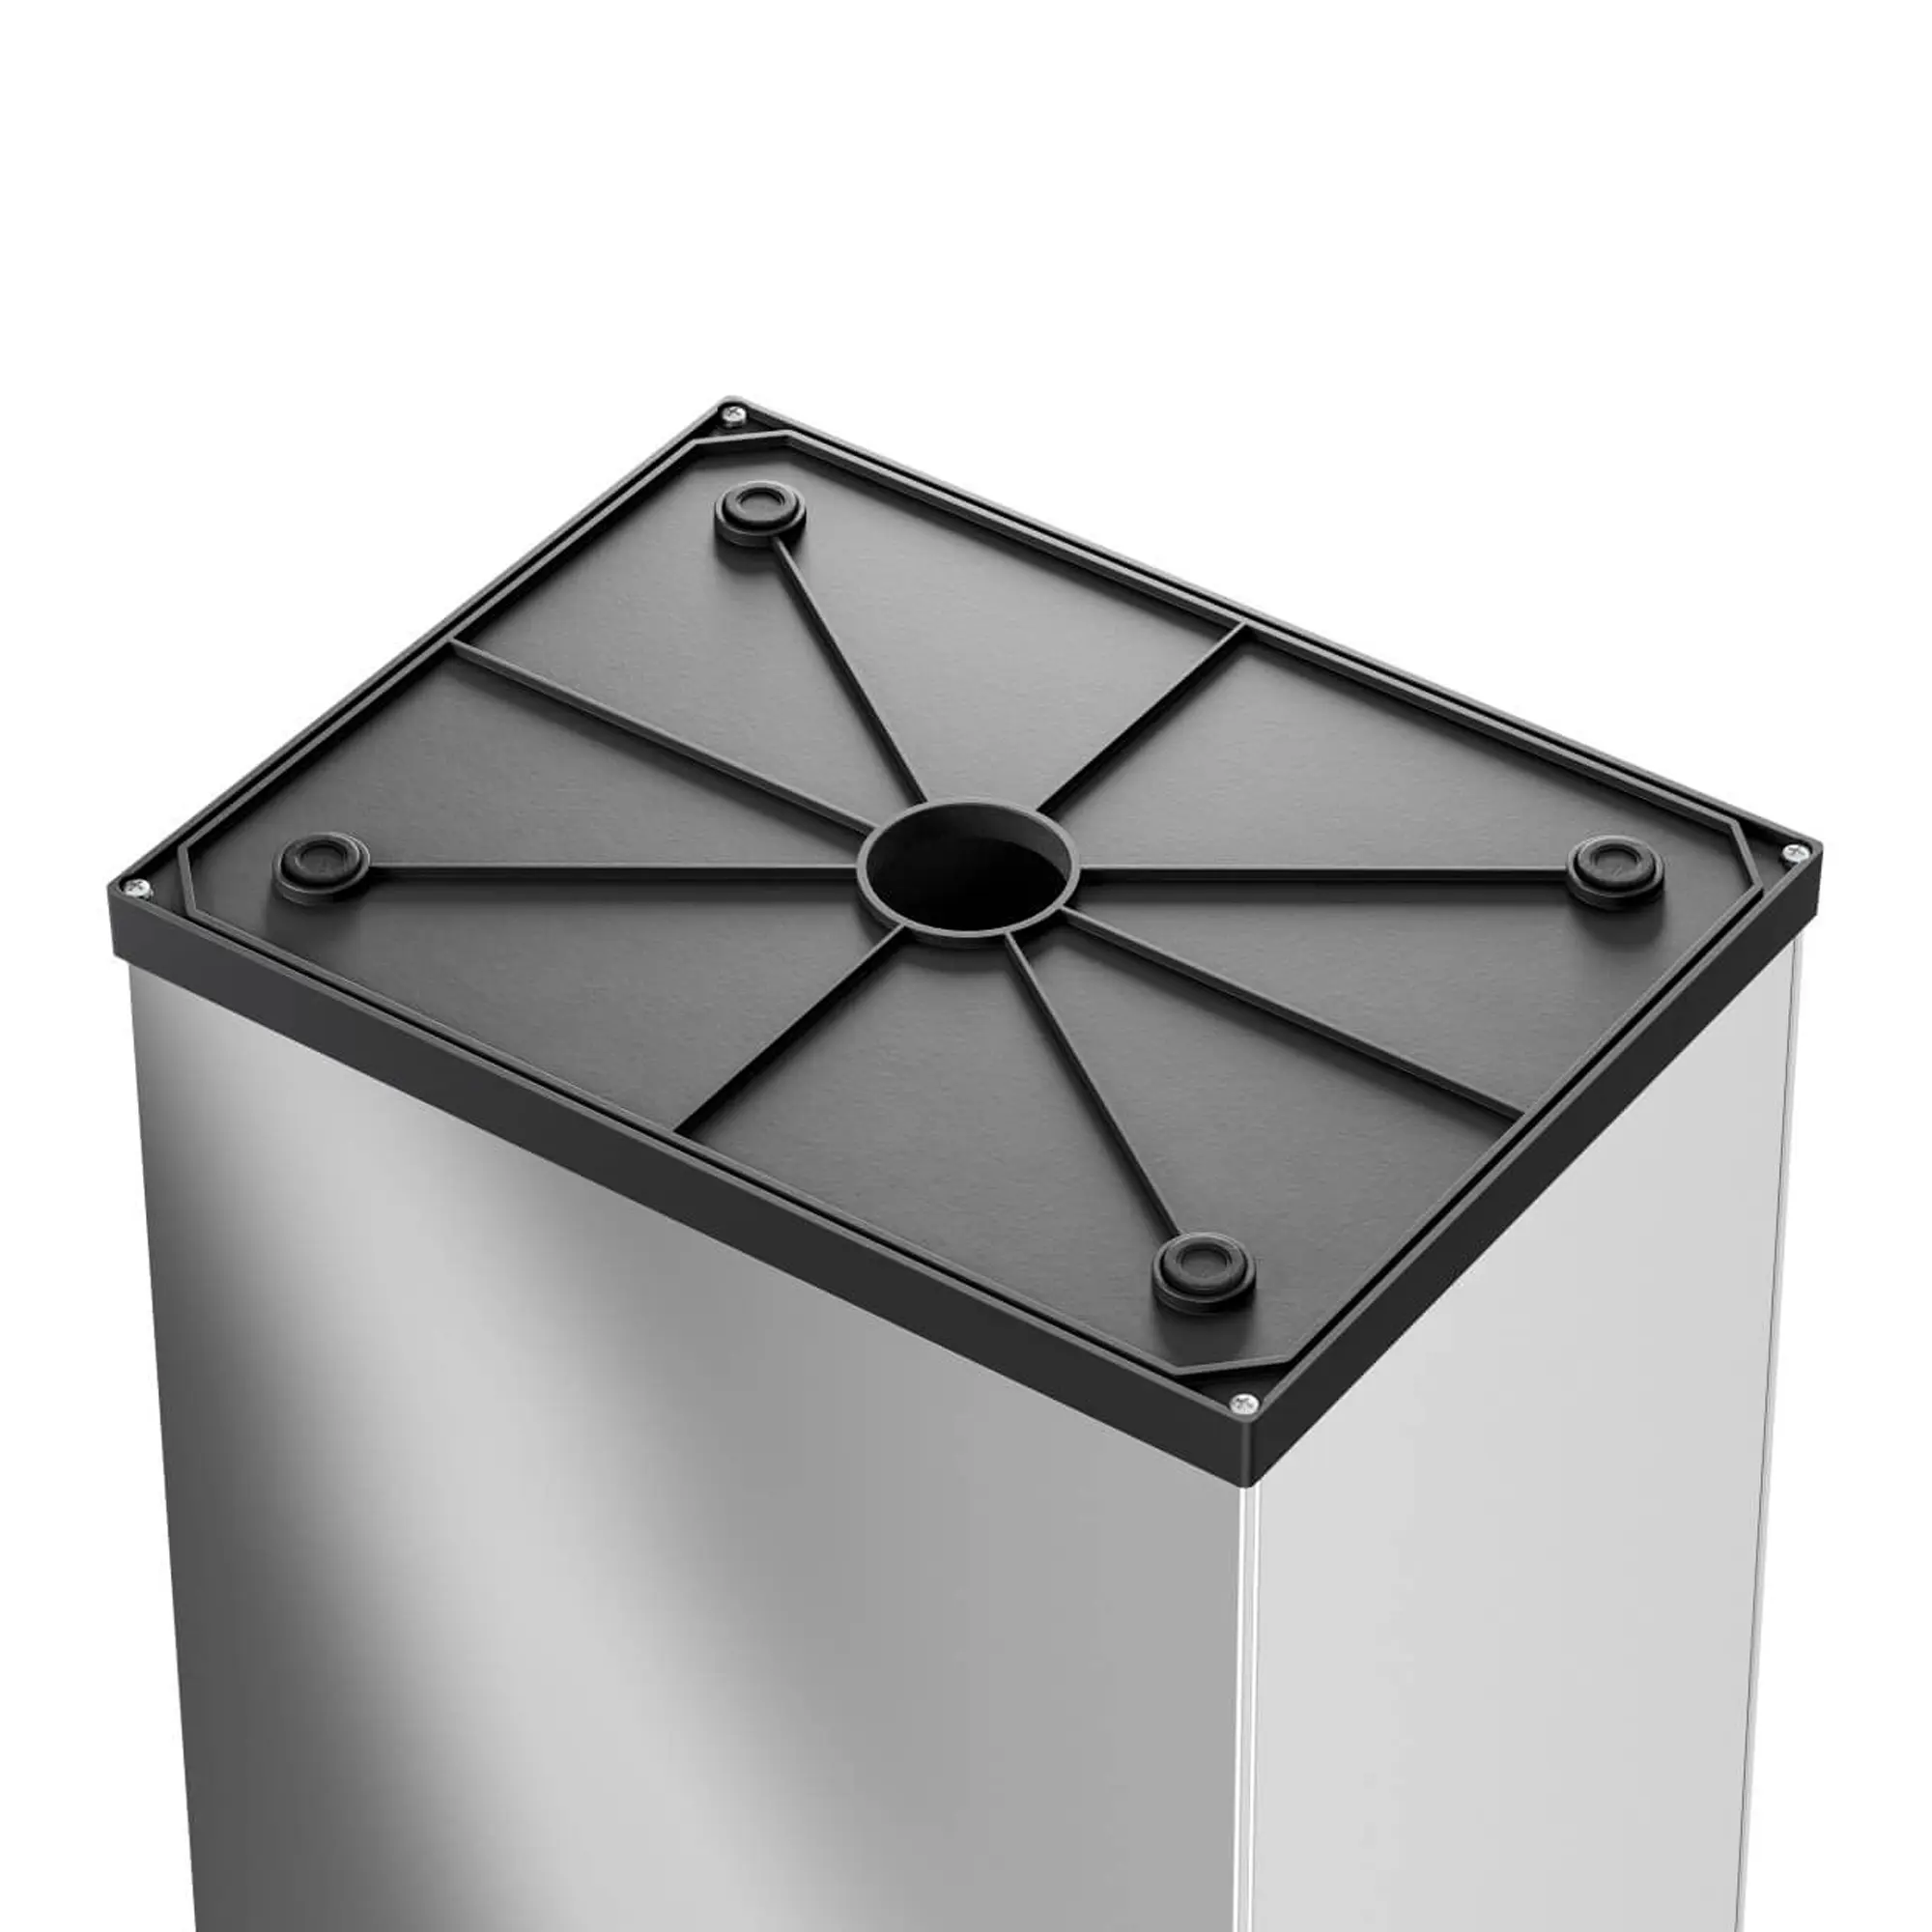 Hailo Großraum-Abfallbox Big-Box Swing XL 52 Liter silber/grau anti rutsch Füße  0860-221